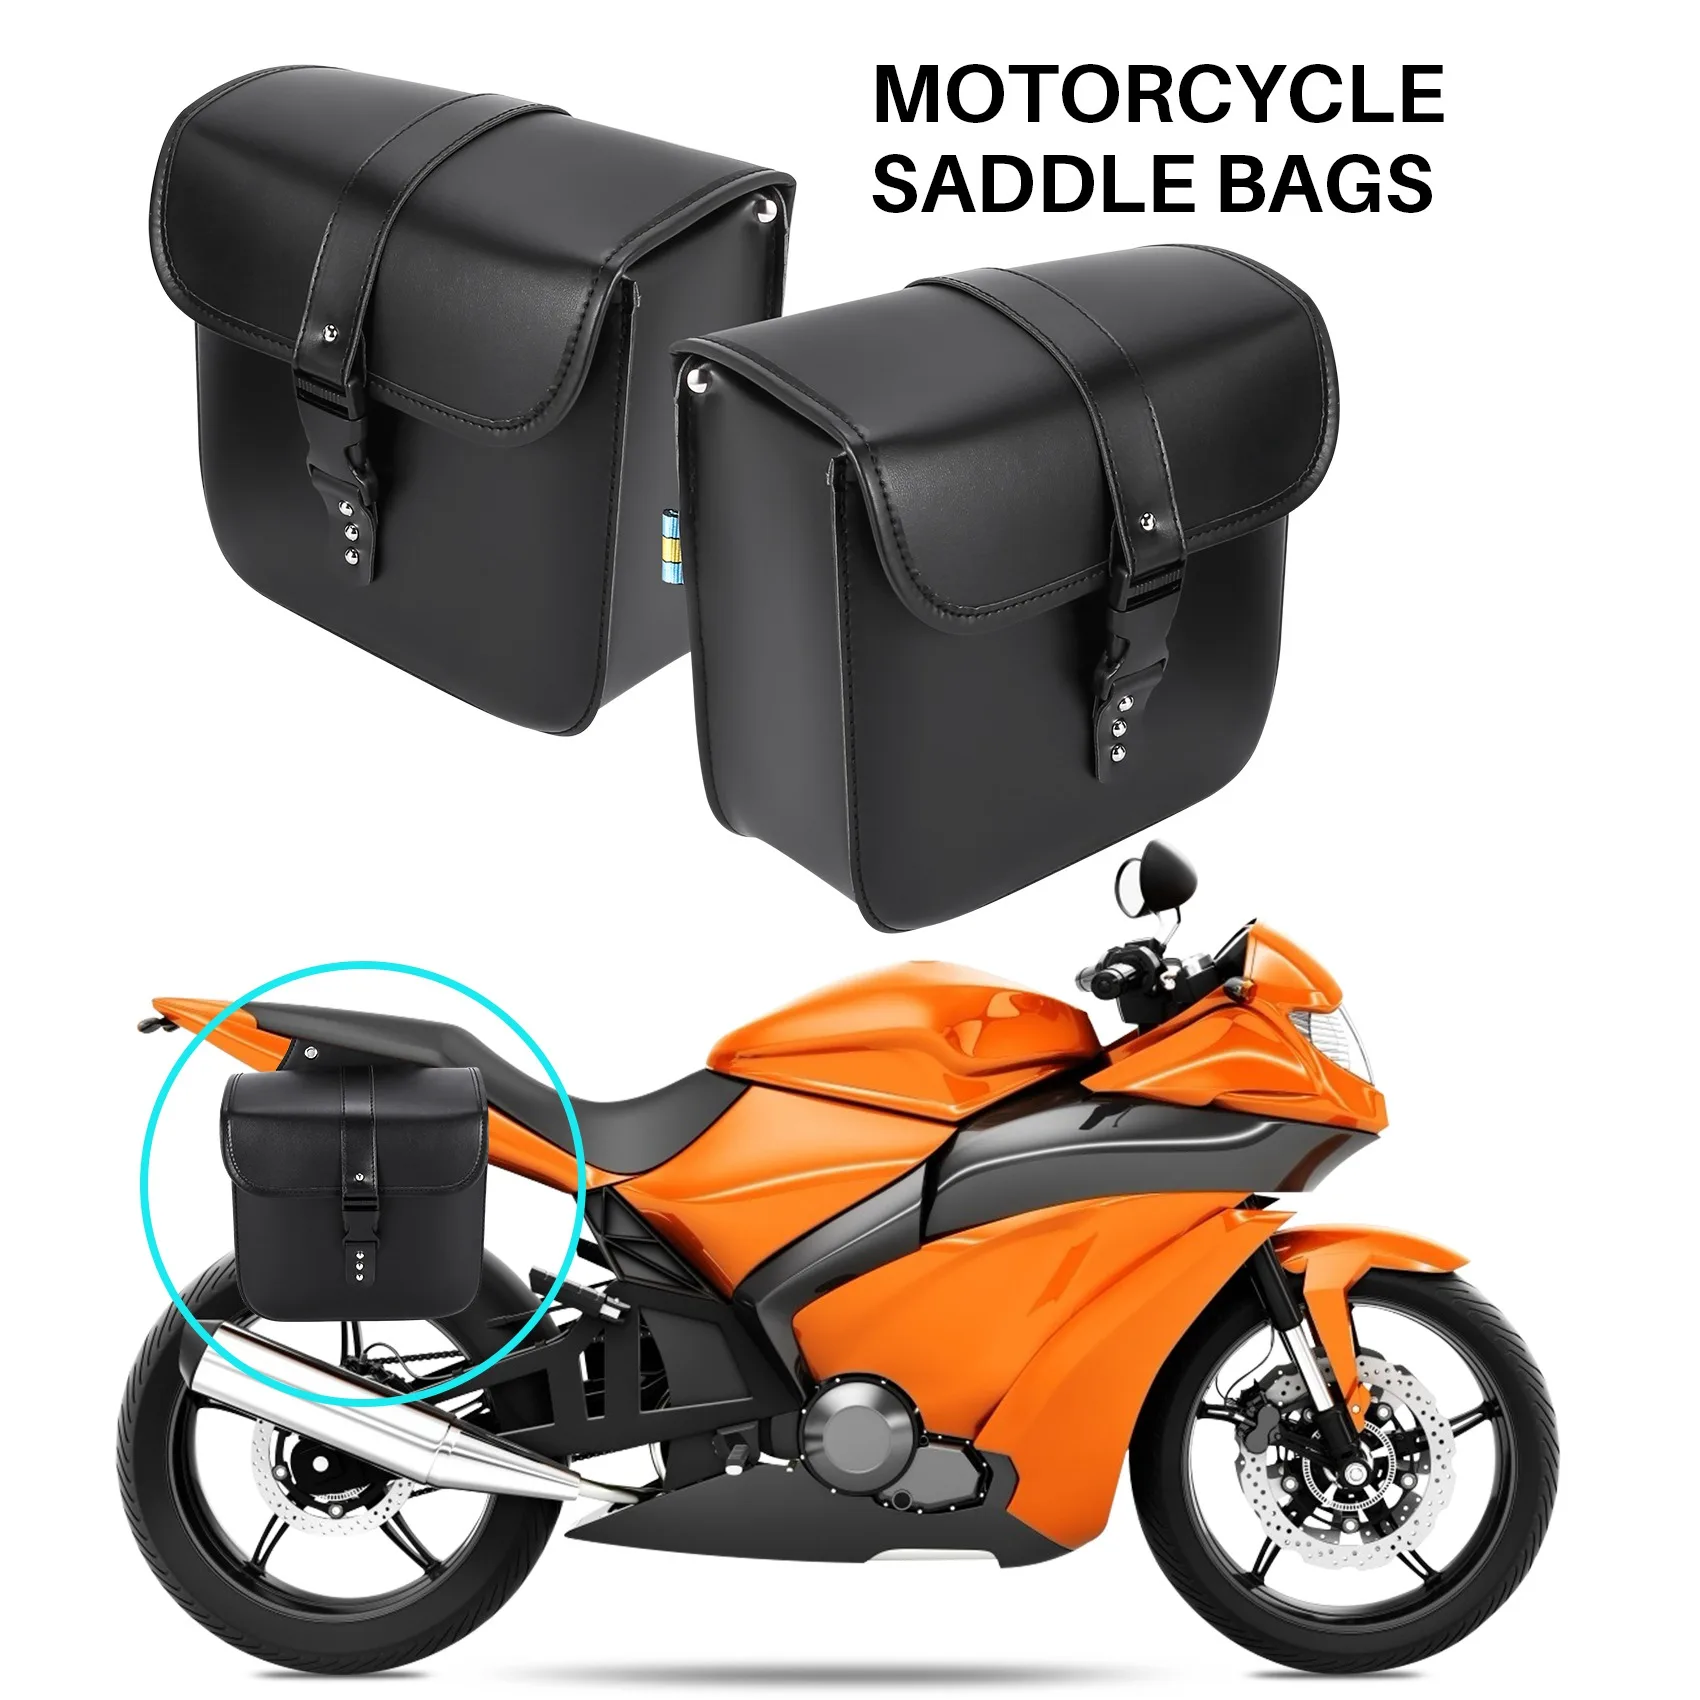 

Universal Motorcycle Saddlebags,Repair Tool Bag Storage Bag for Honda Shadow Suzuki Pu Side Tool Bag Luggage Black